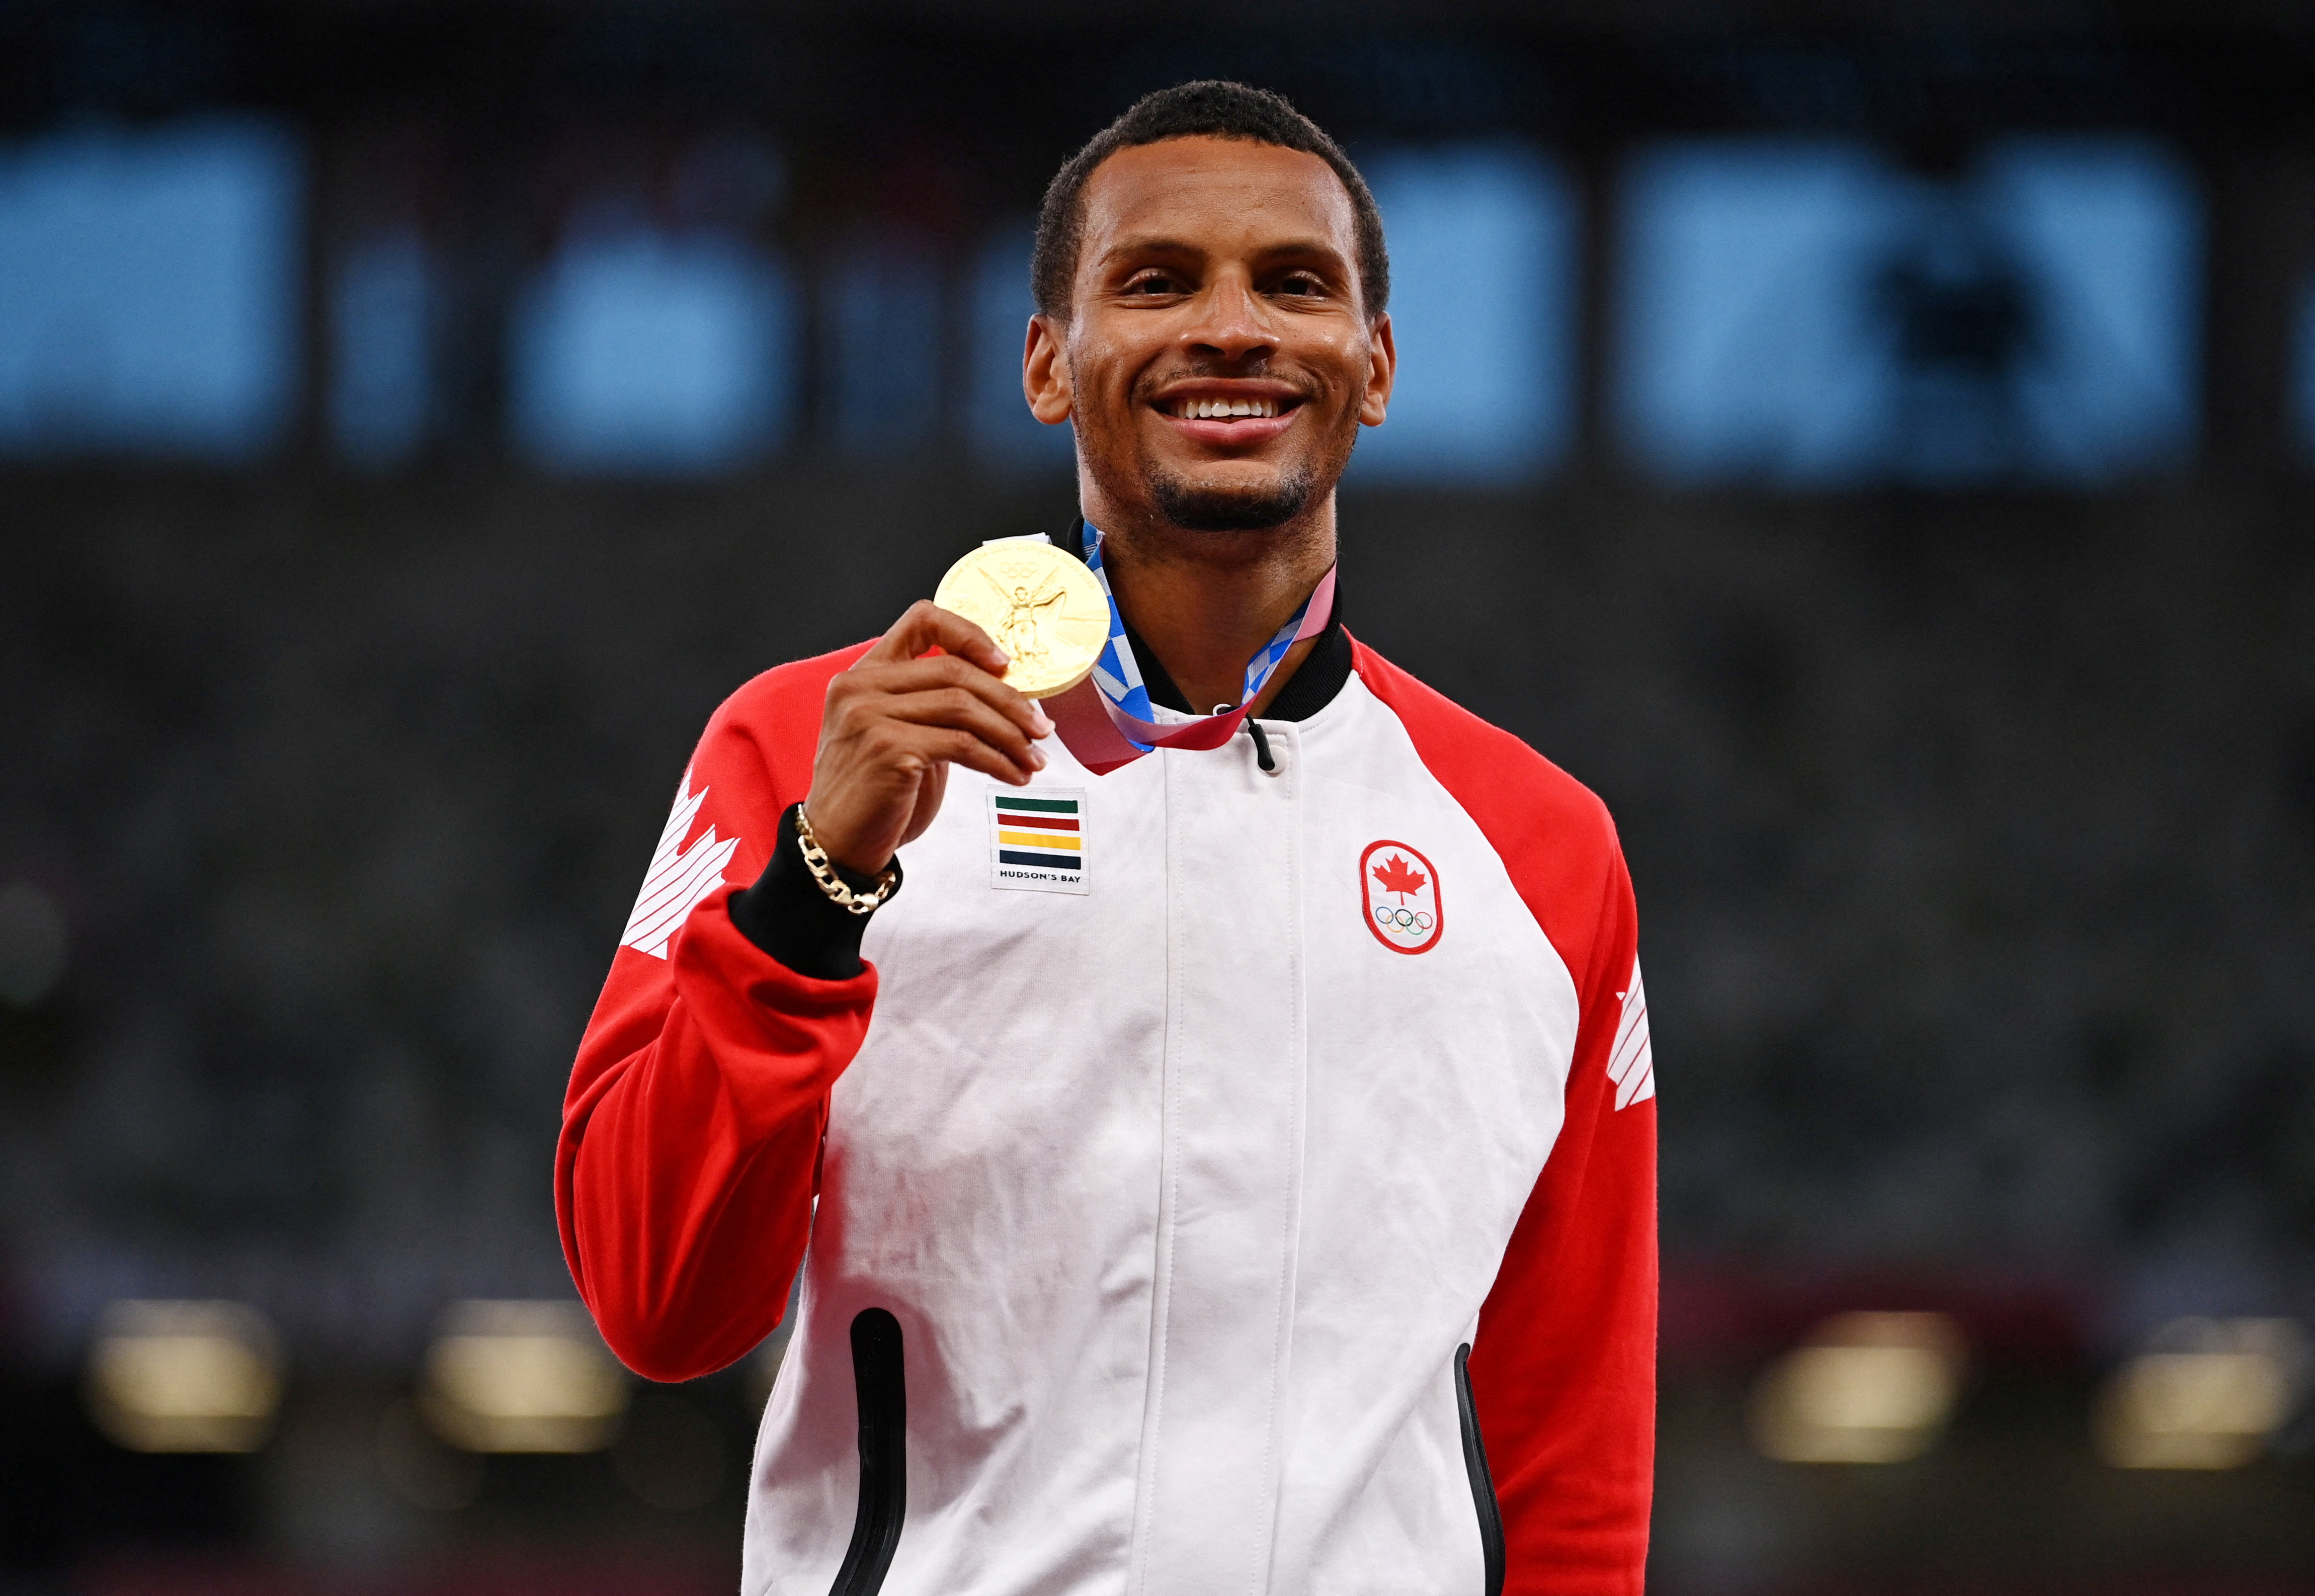 Athletics - Men's 200m - Medal Ceremony